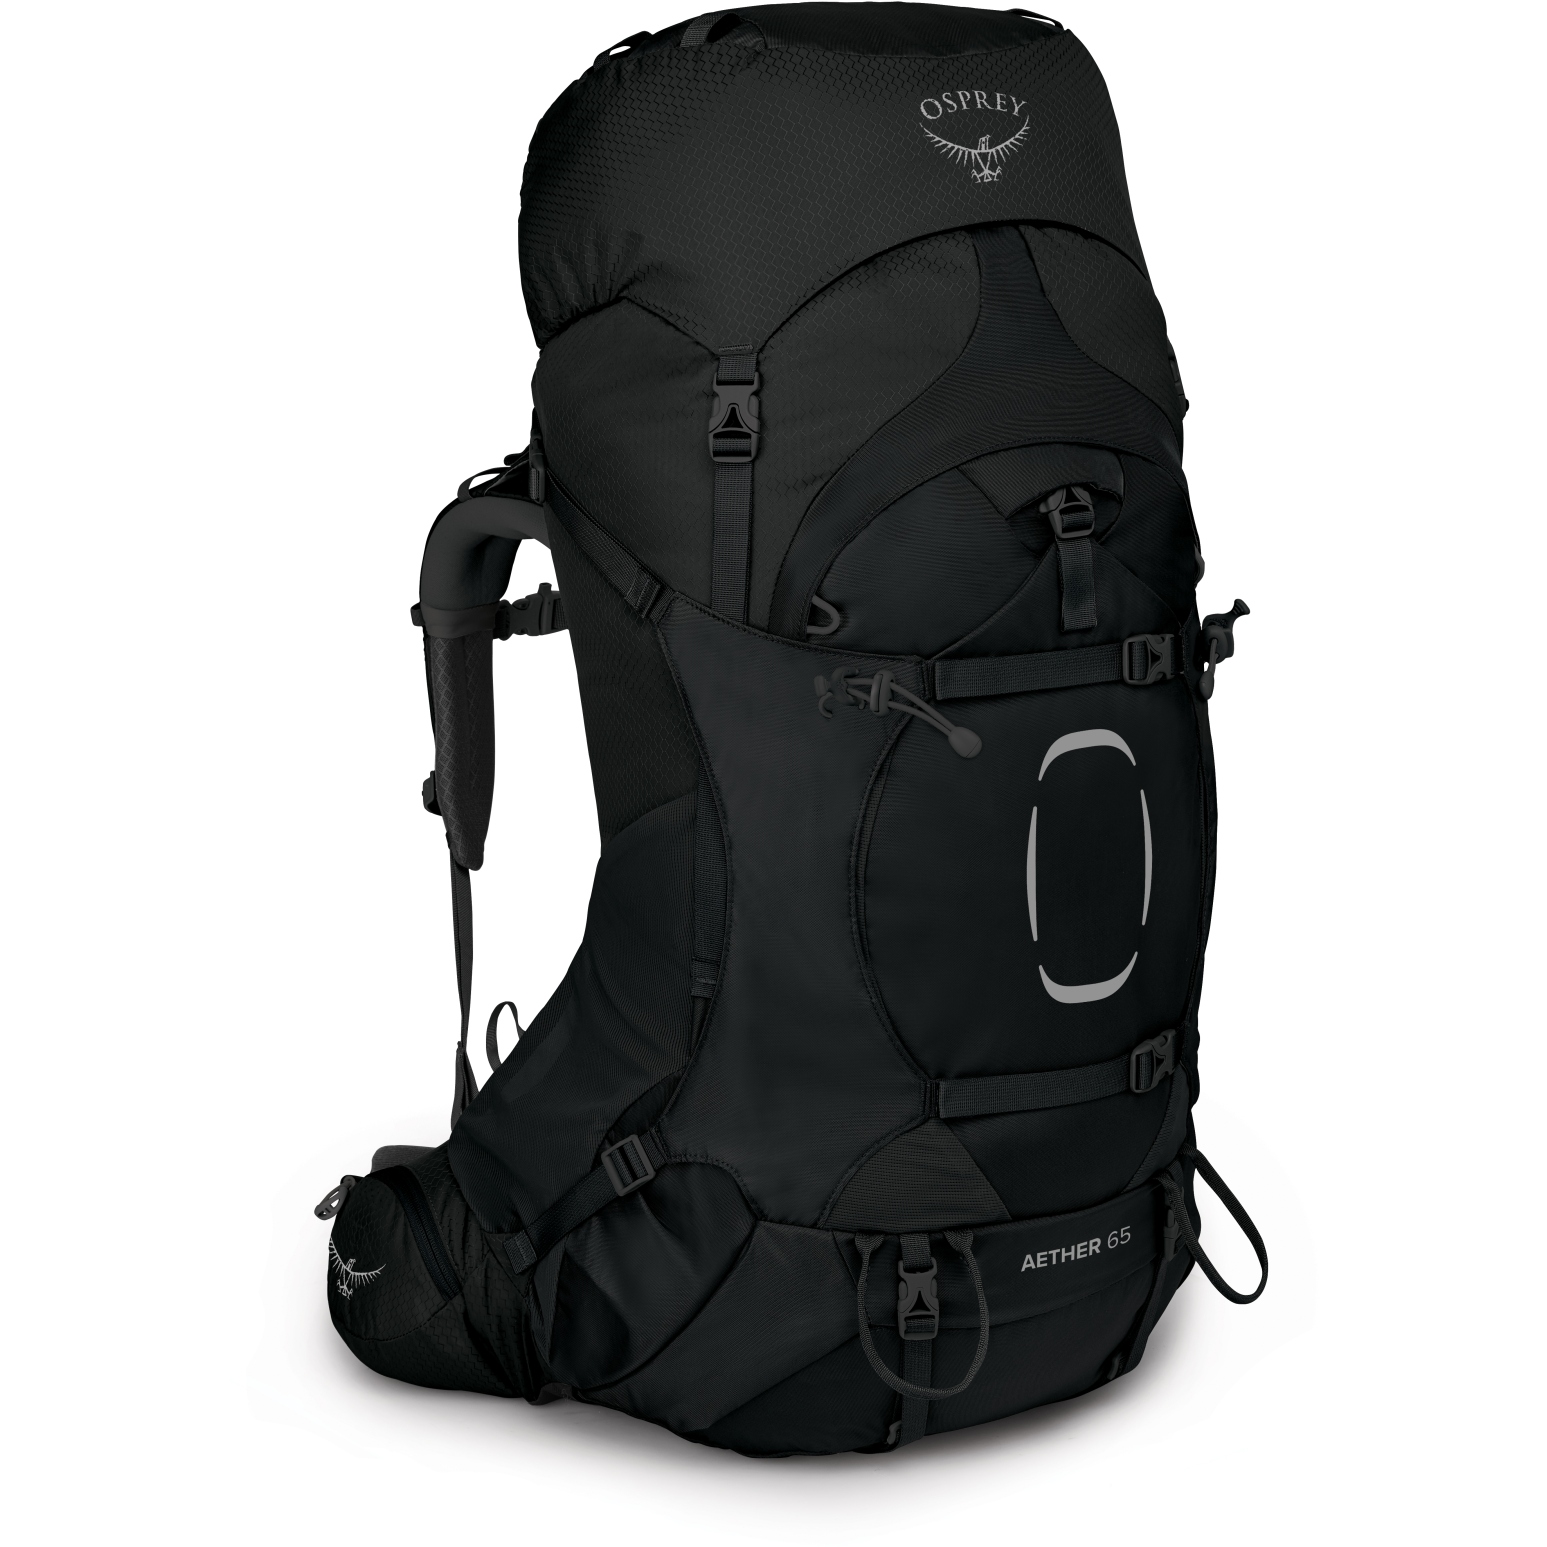 Productfoto van Osprey Aether 65 Backpack - Black - S/M